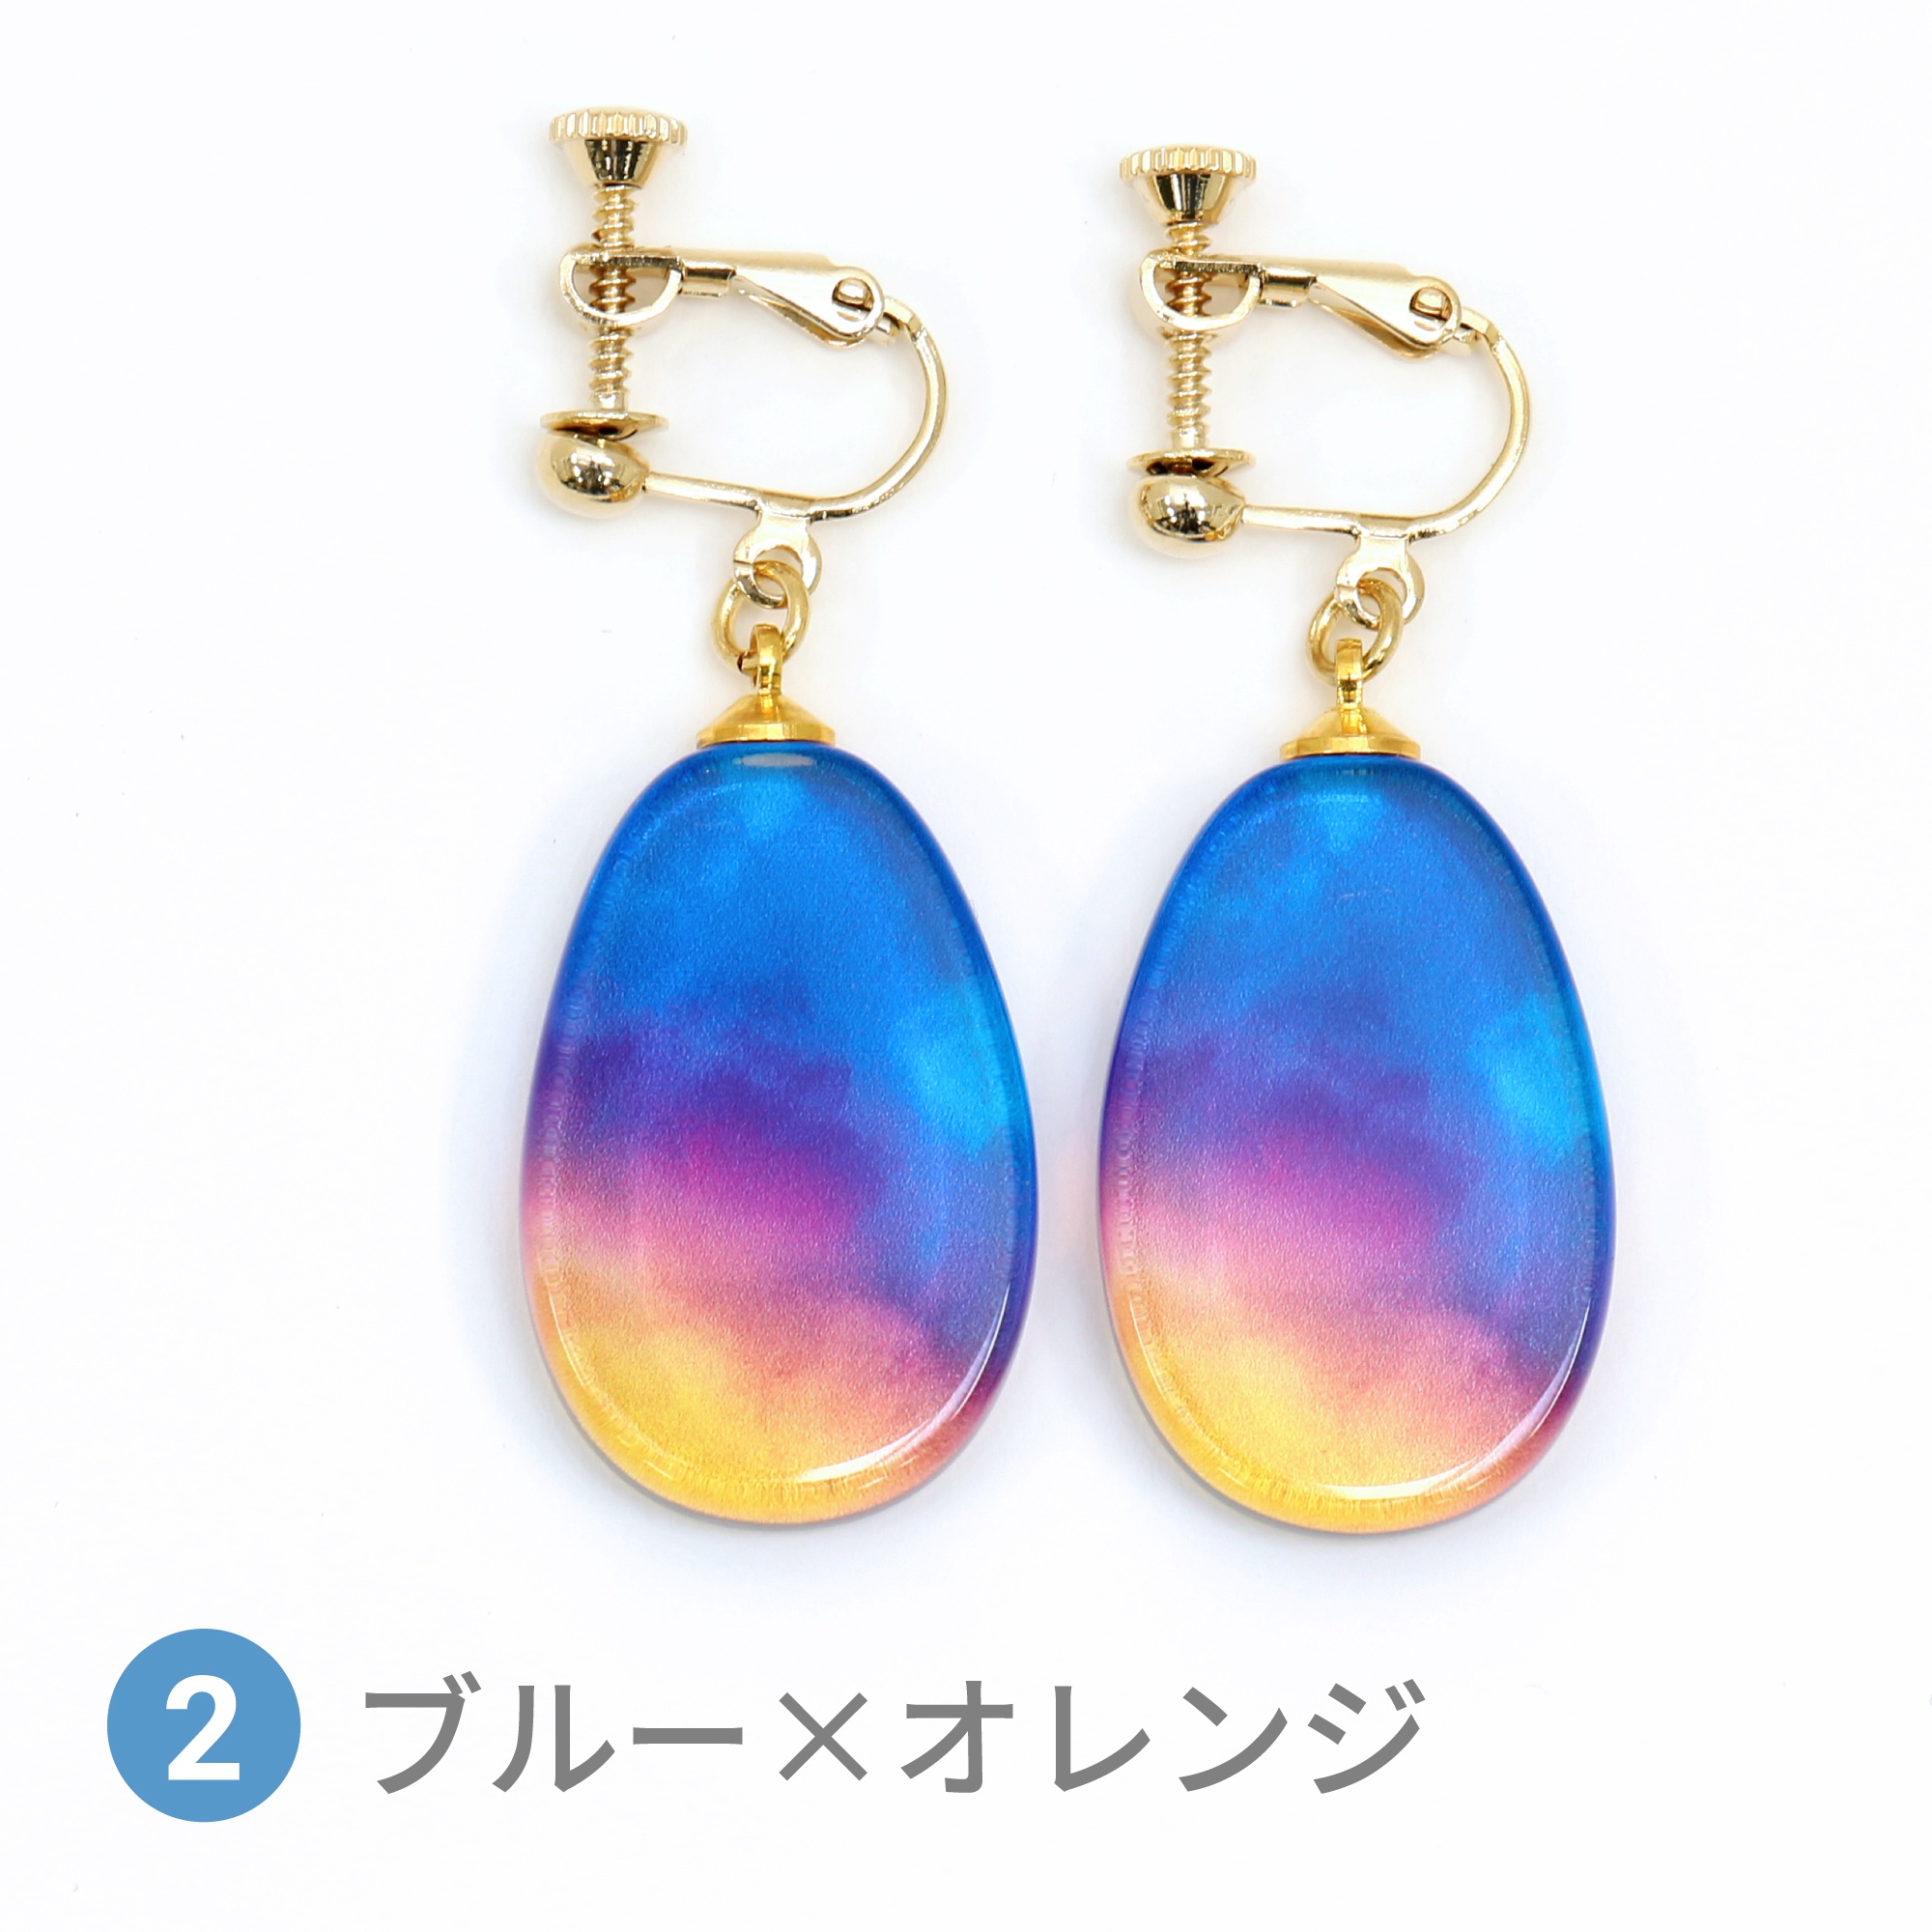 Glass accessories Earring AURORA blue &orange drop shape